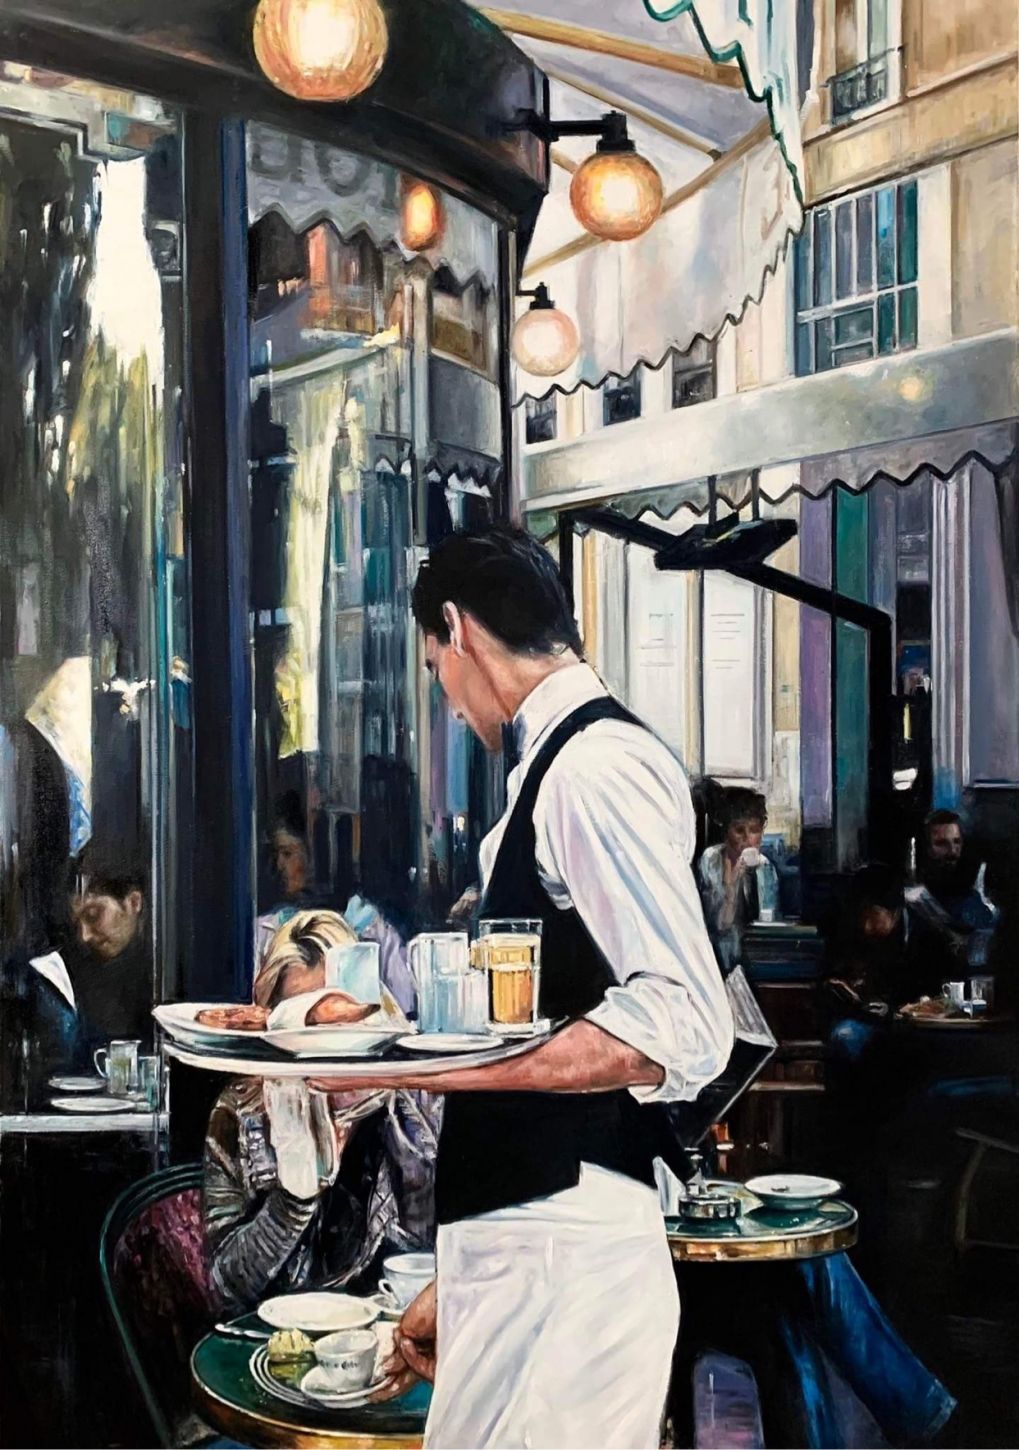 Andrew Kinsman - 'Cafe De Flore' - Framed Limited Edition Small